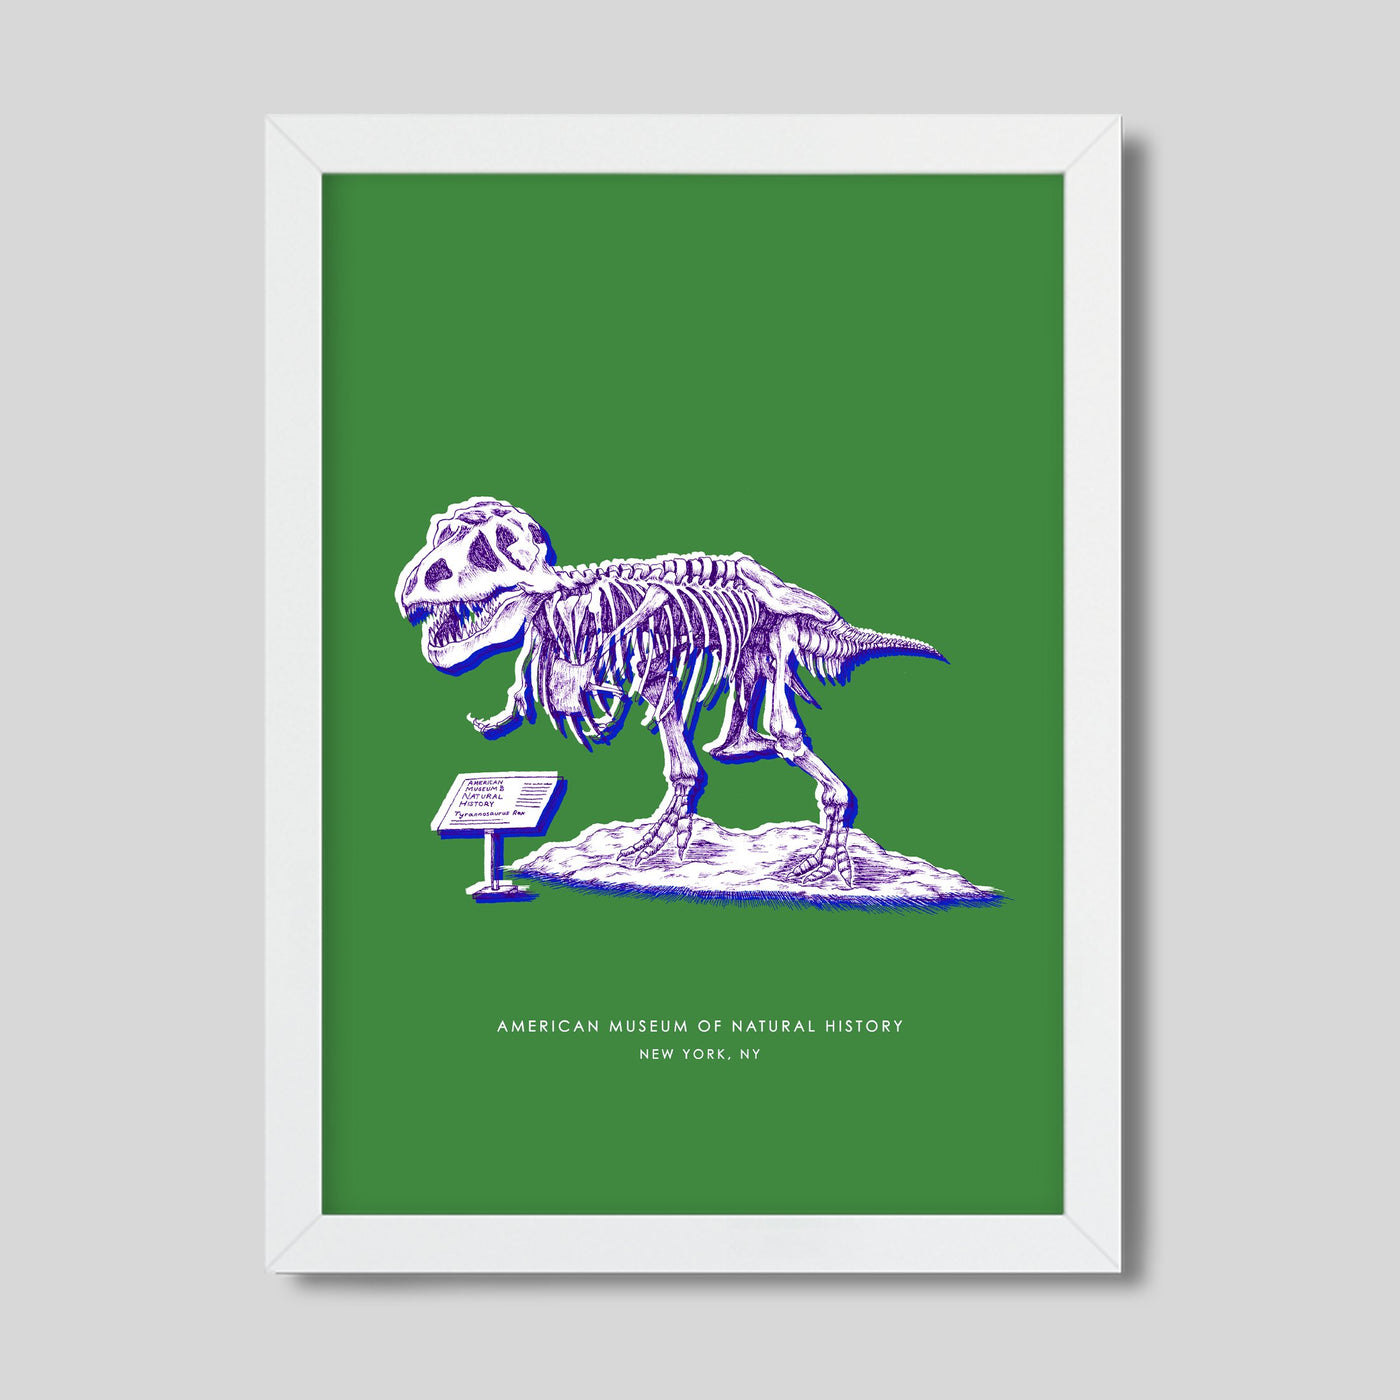 Gallery Prints Green Print / 8x10 / White Frame New York Dinosaur Print dombezalergii